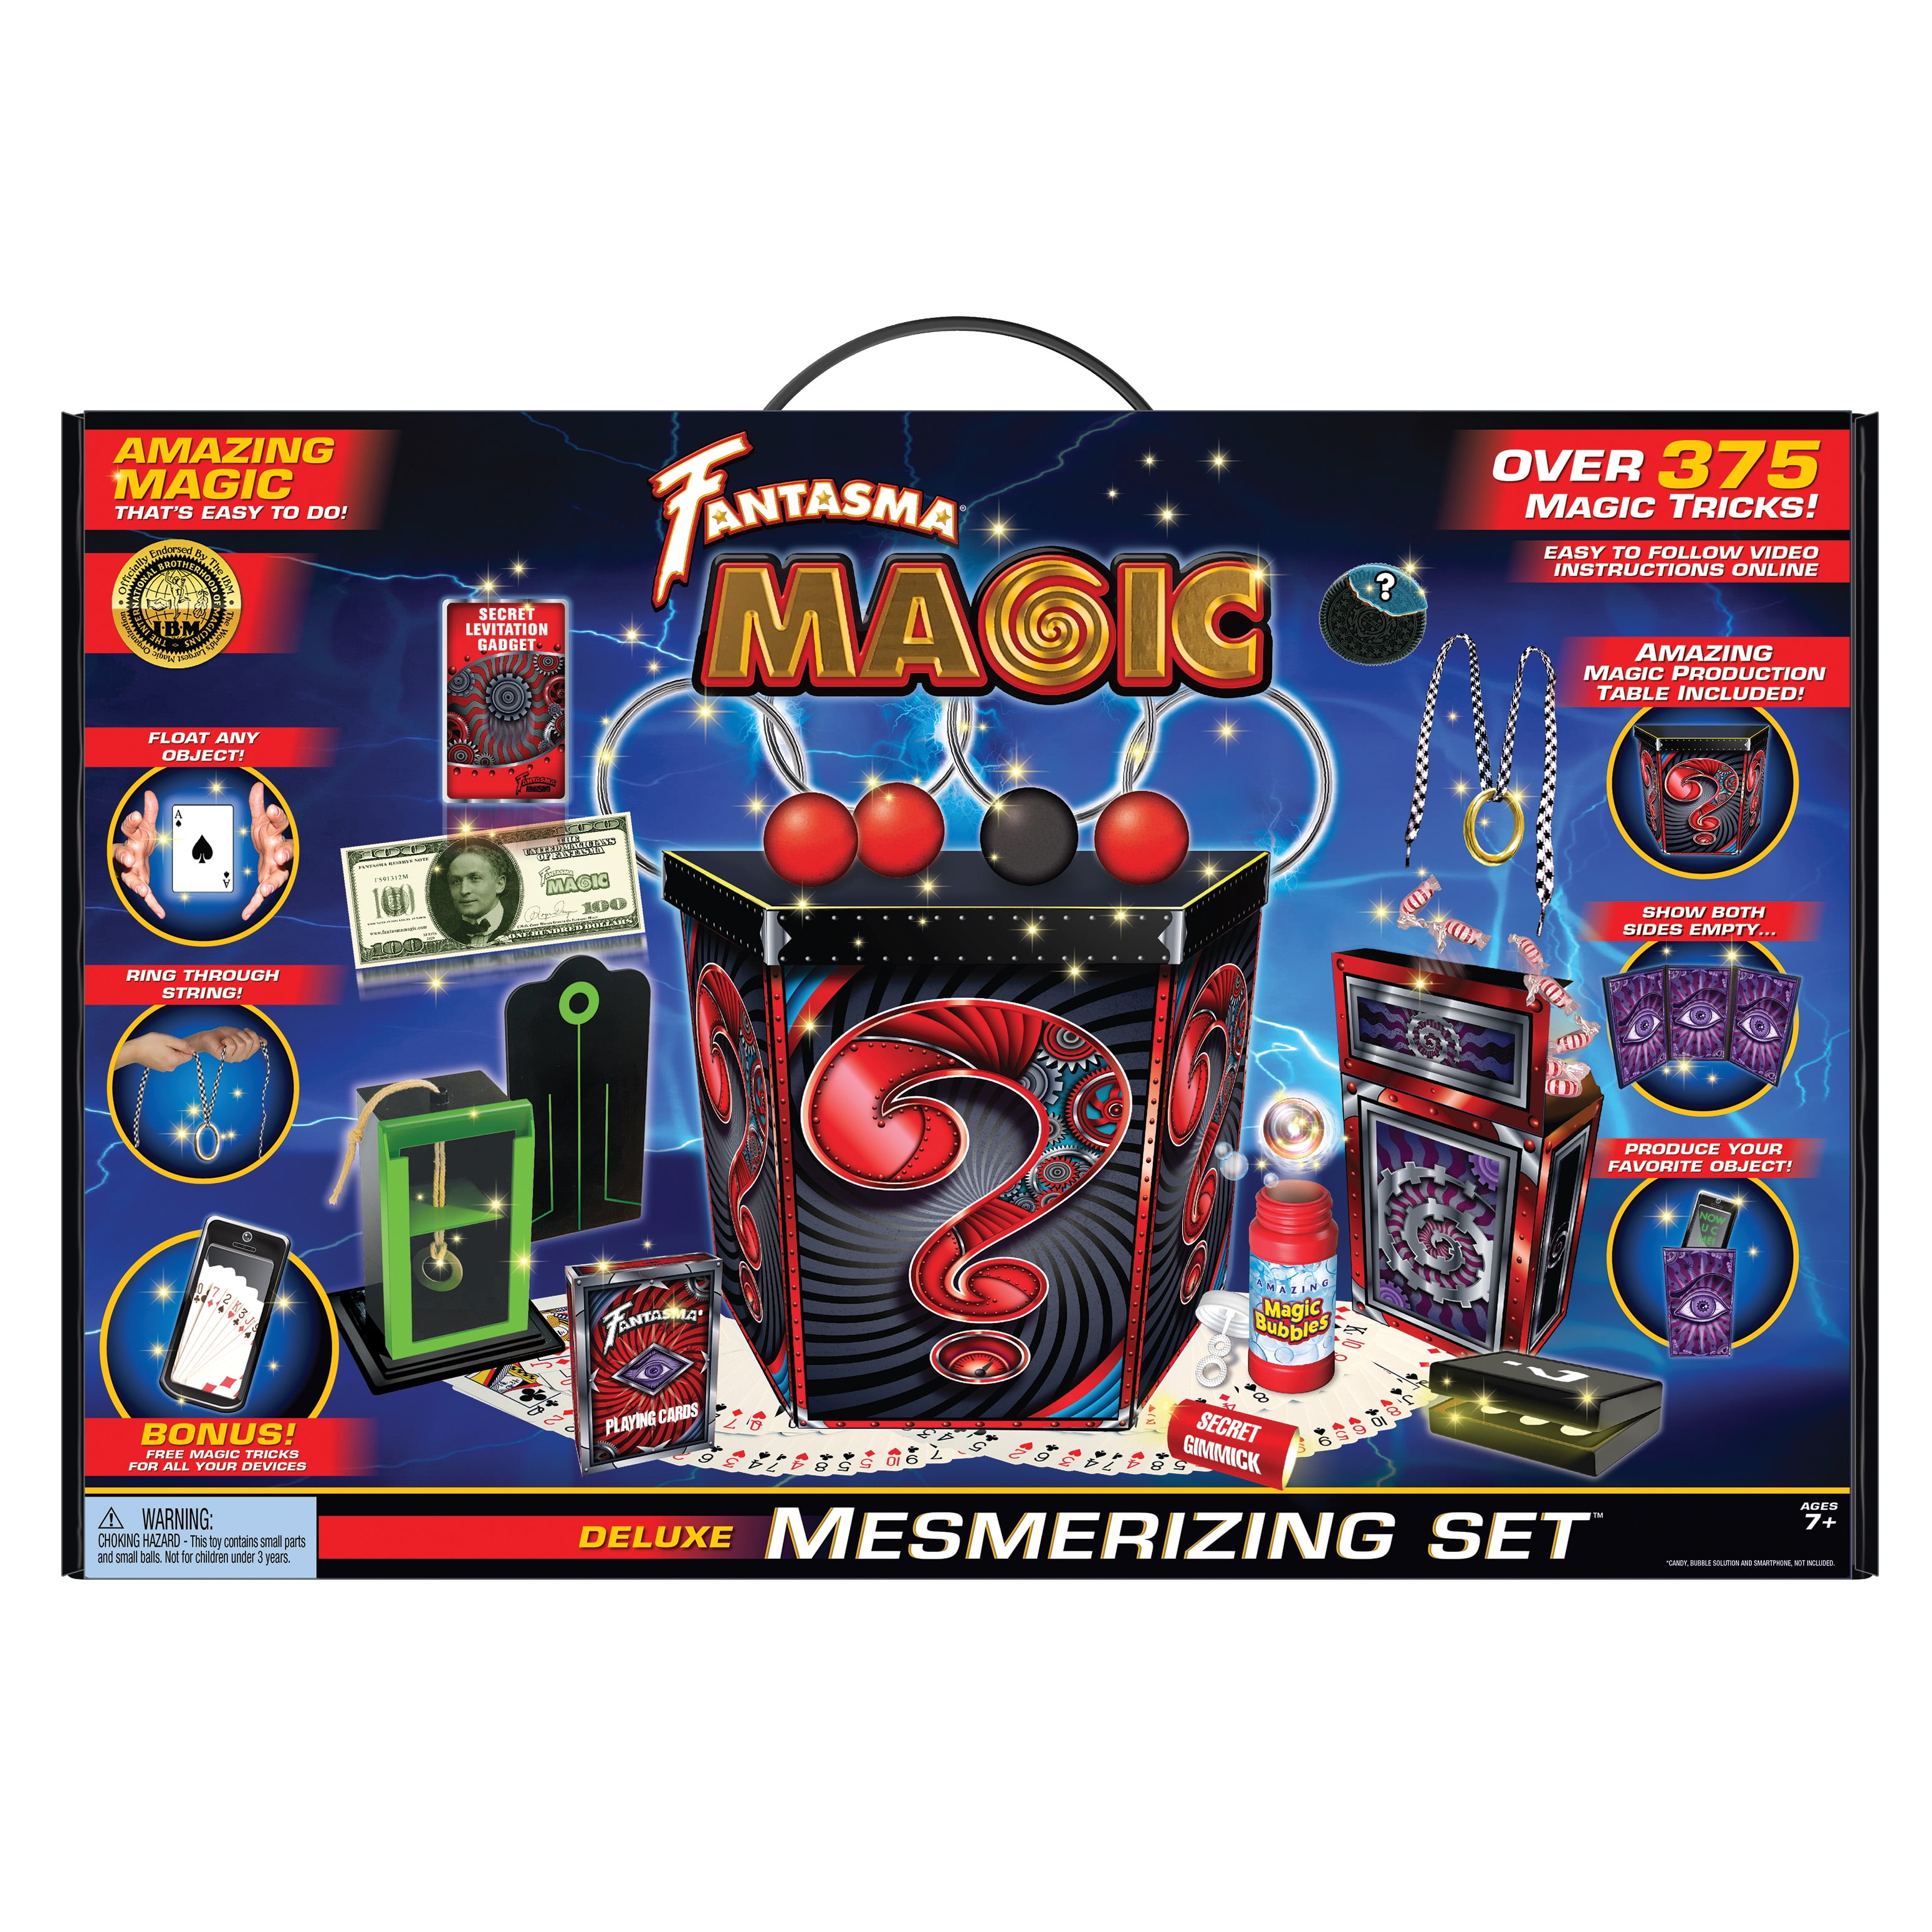 36 MINI MAGIC WANDS Multi Color Tiny 4" Pack Plastic Magician Trick Set Toy Gift 